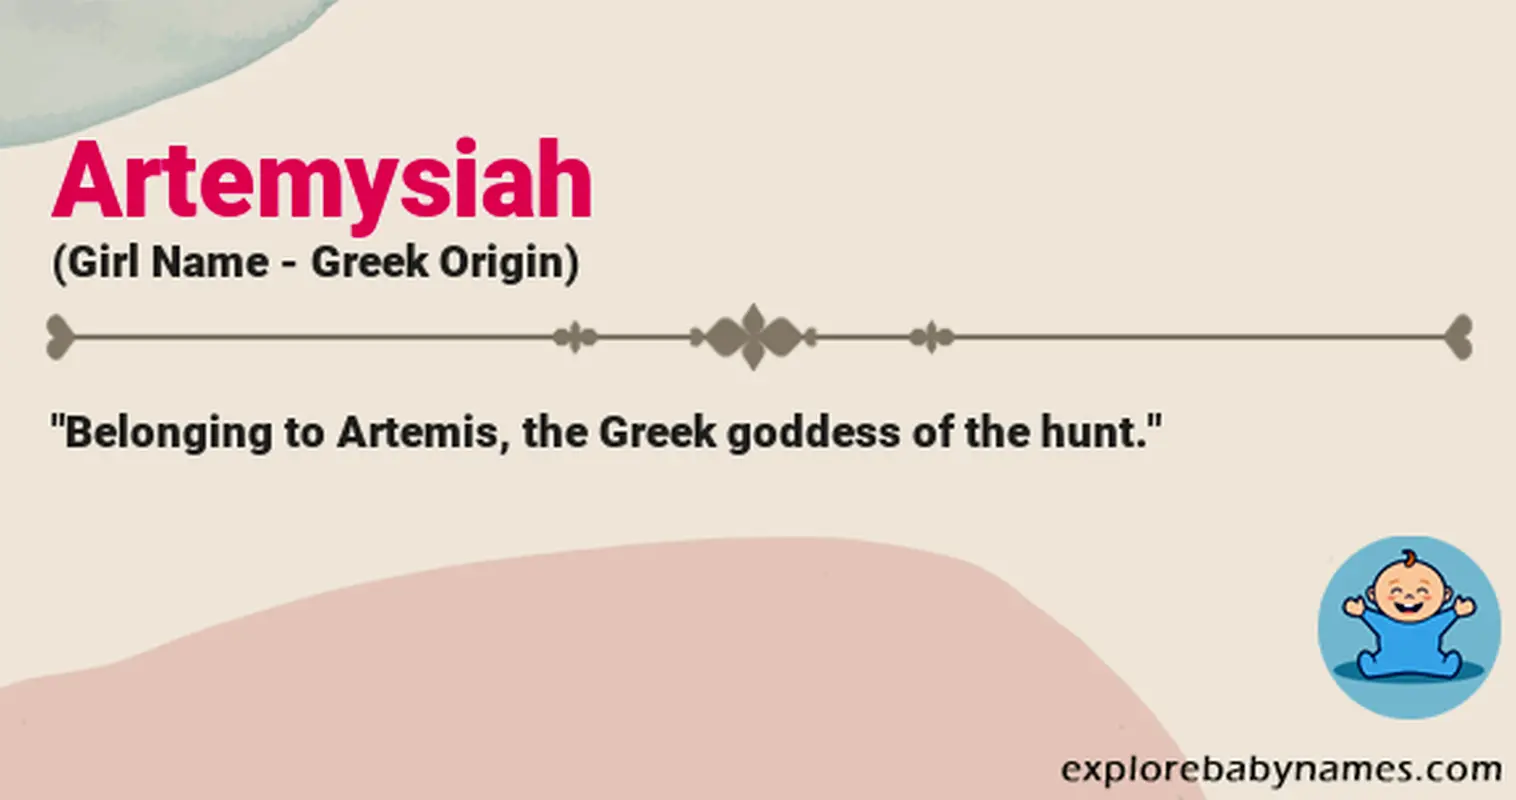 Meaning of Artemysiah